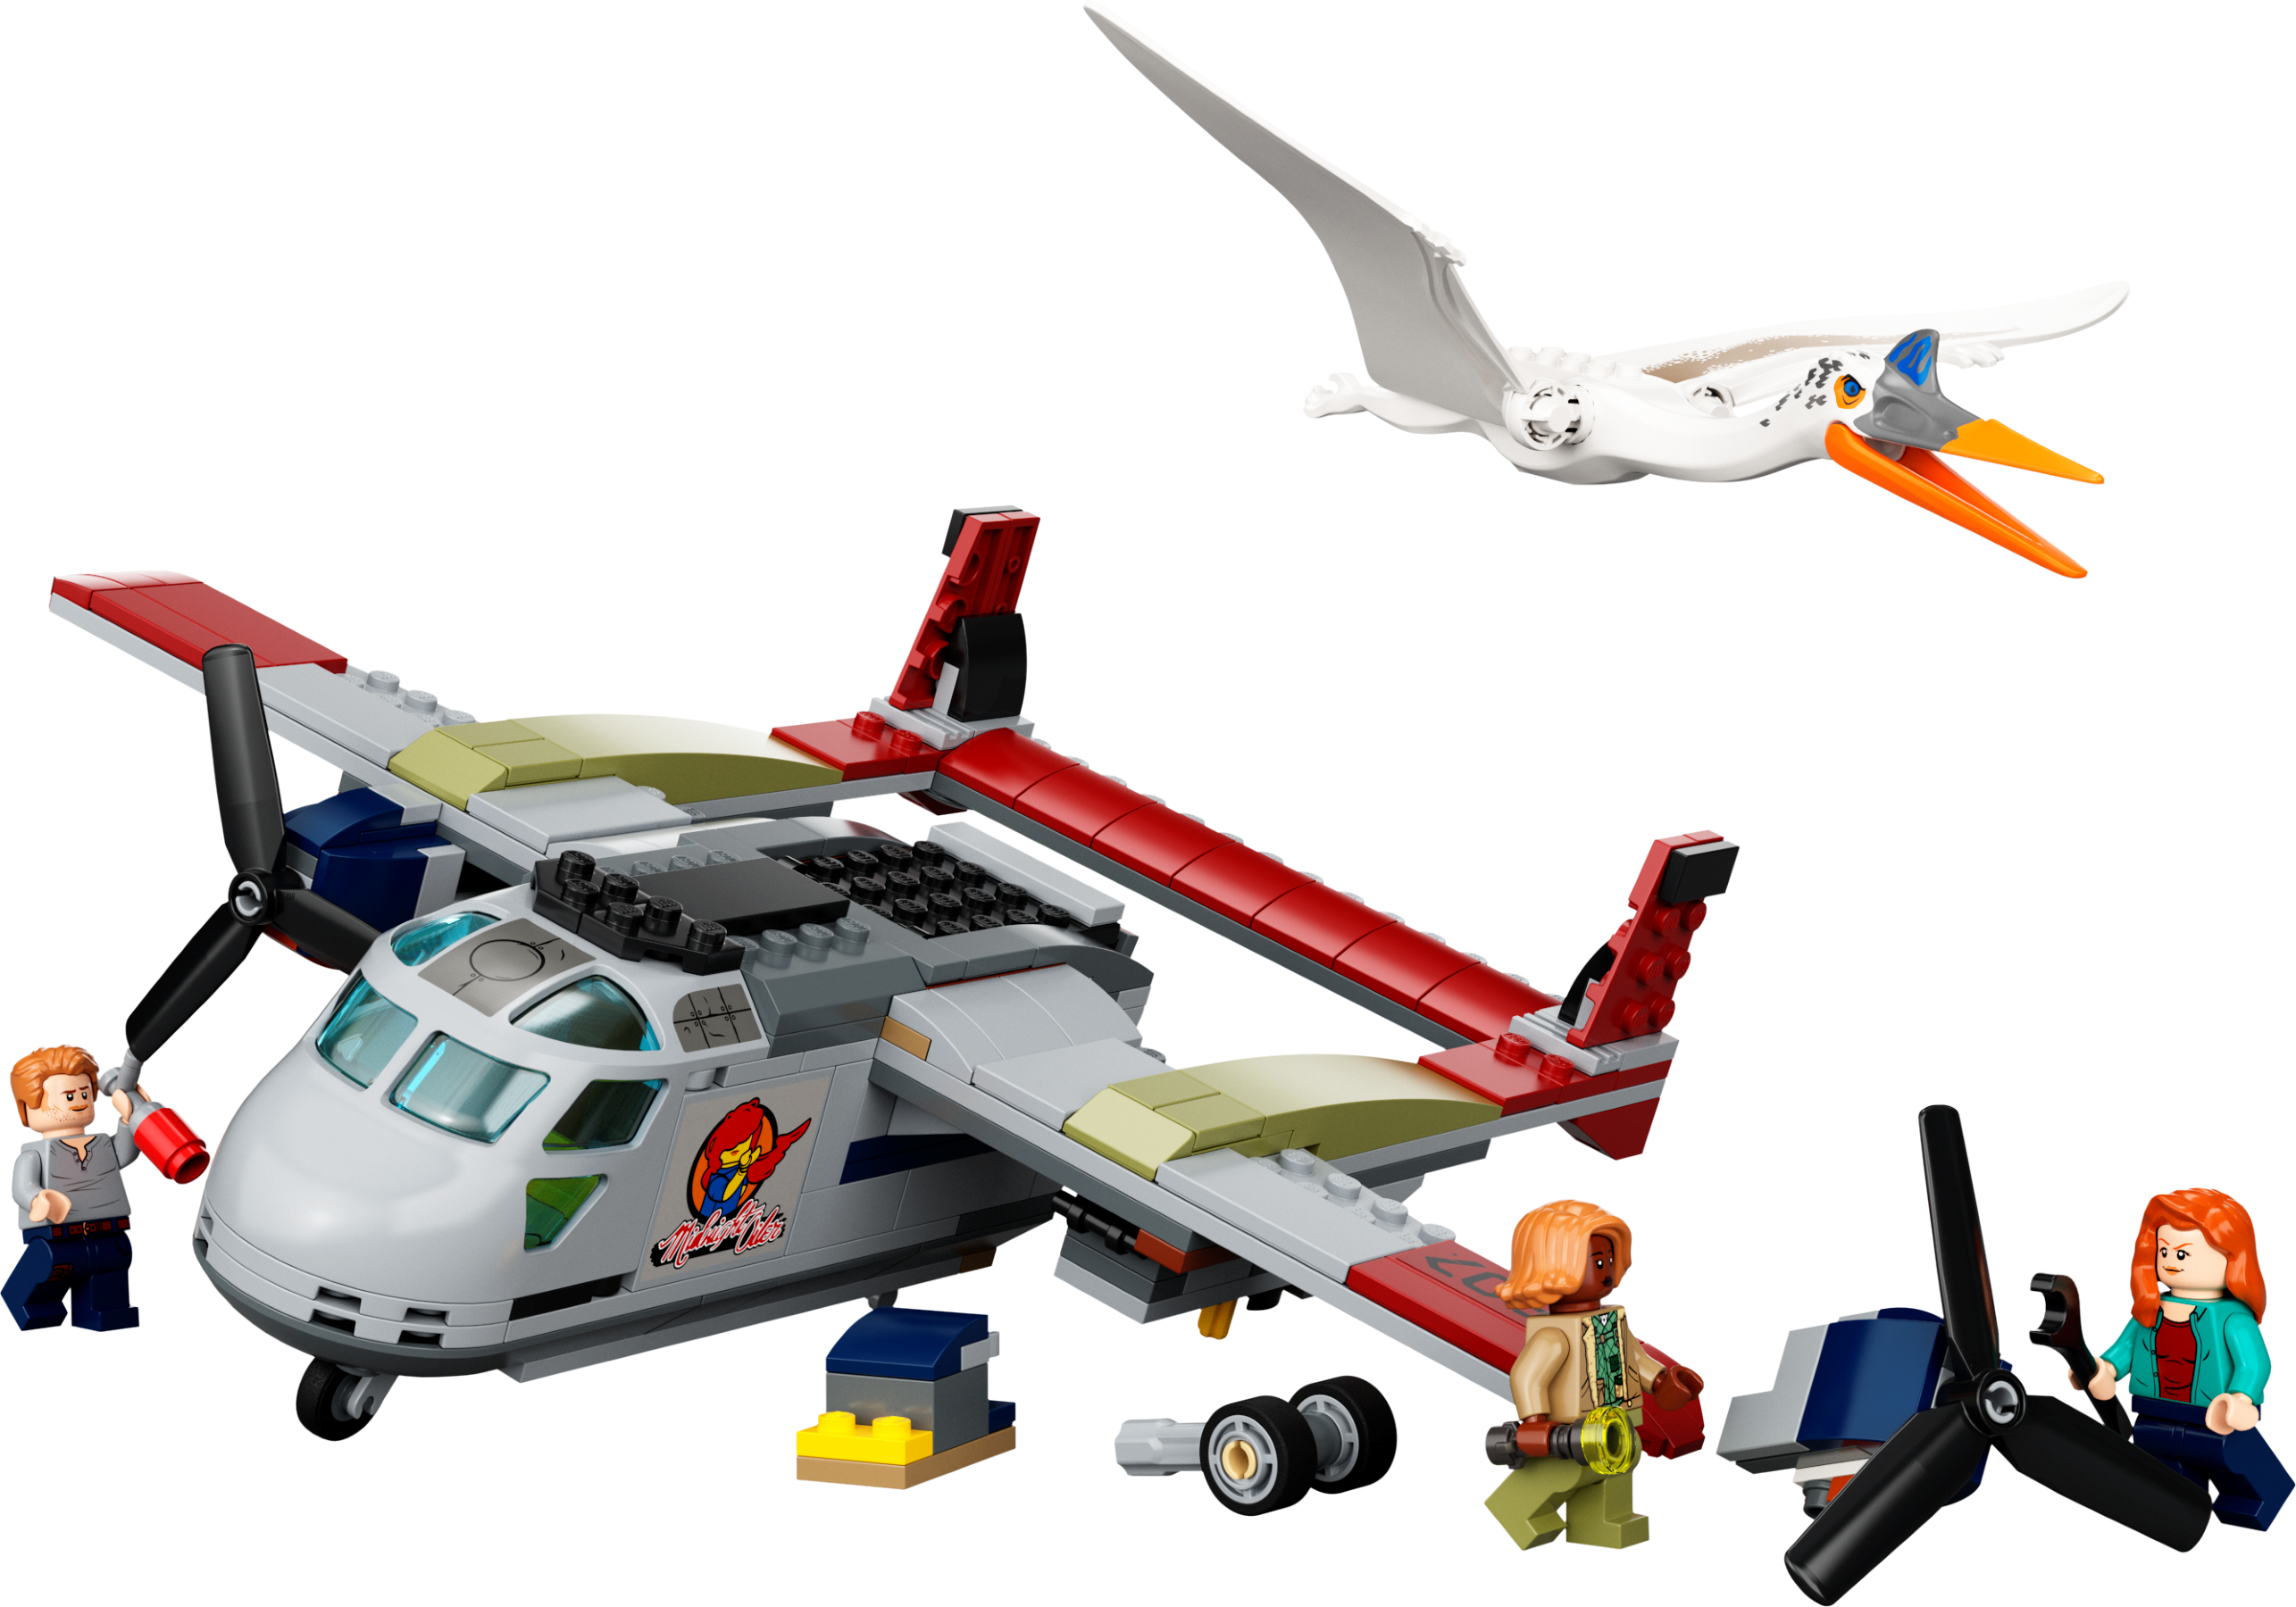 lego city plane crash